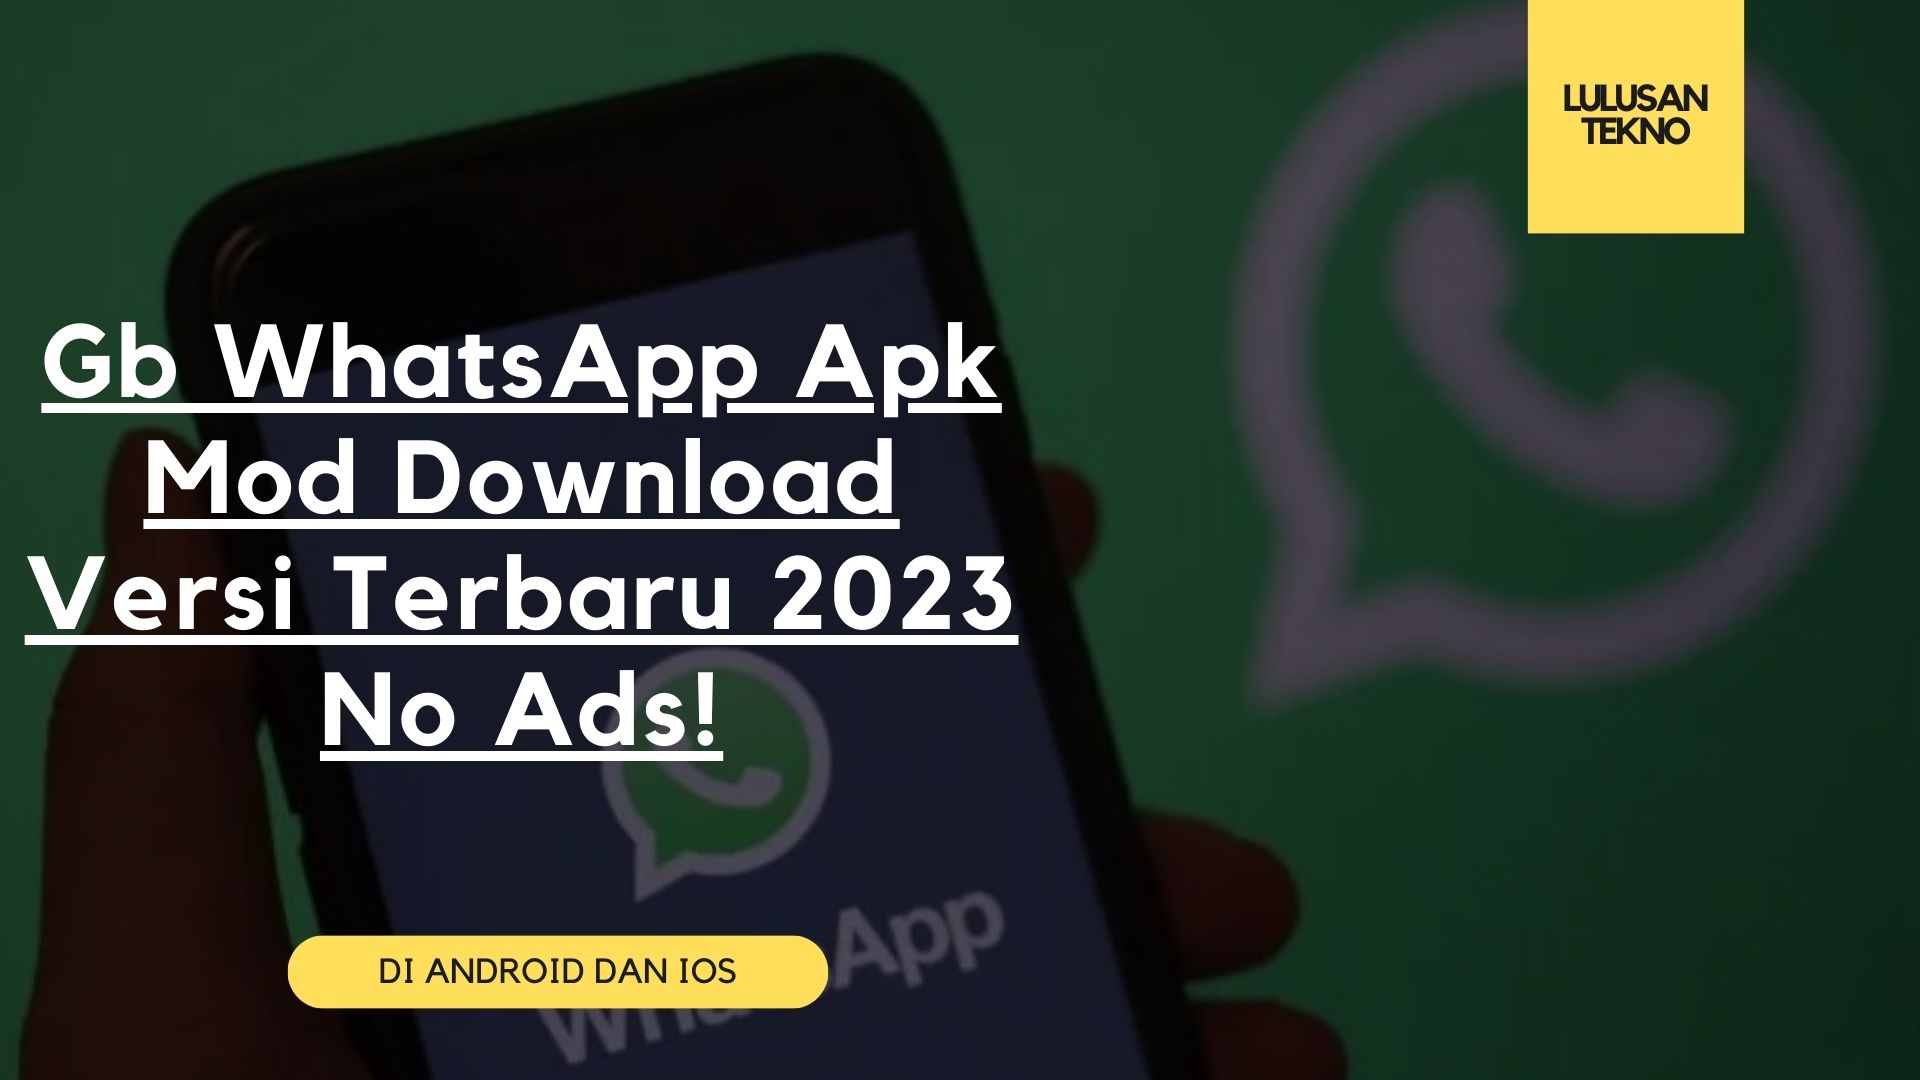 Gb WhatsApp Apk Mod Download Versi Terbaru 2023 No Ads!